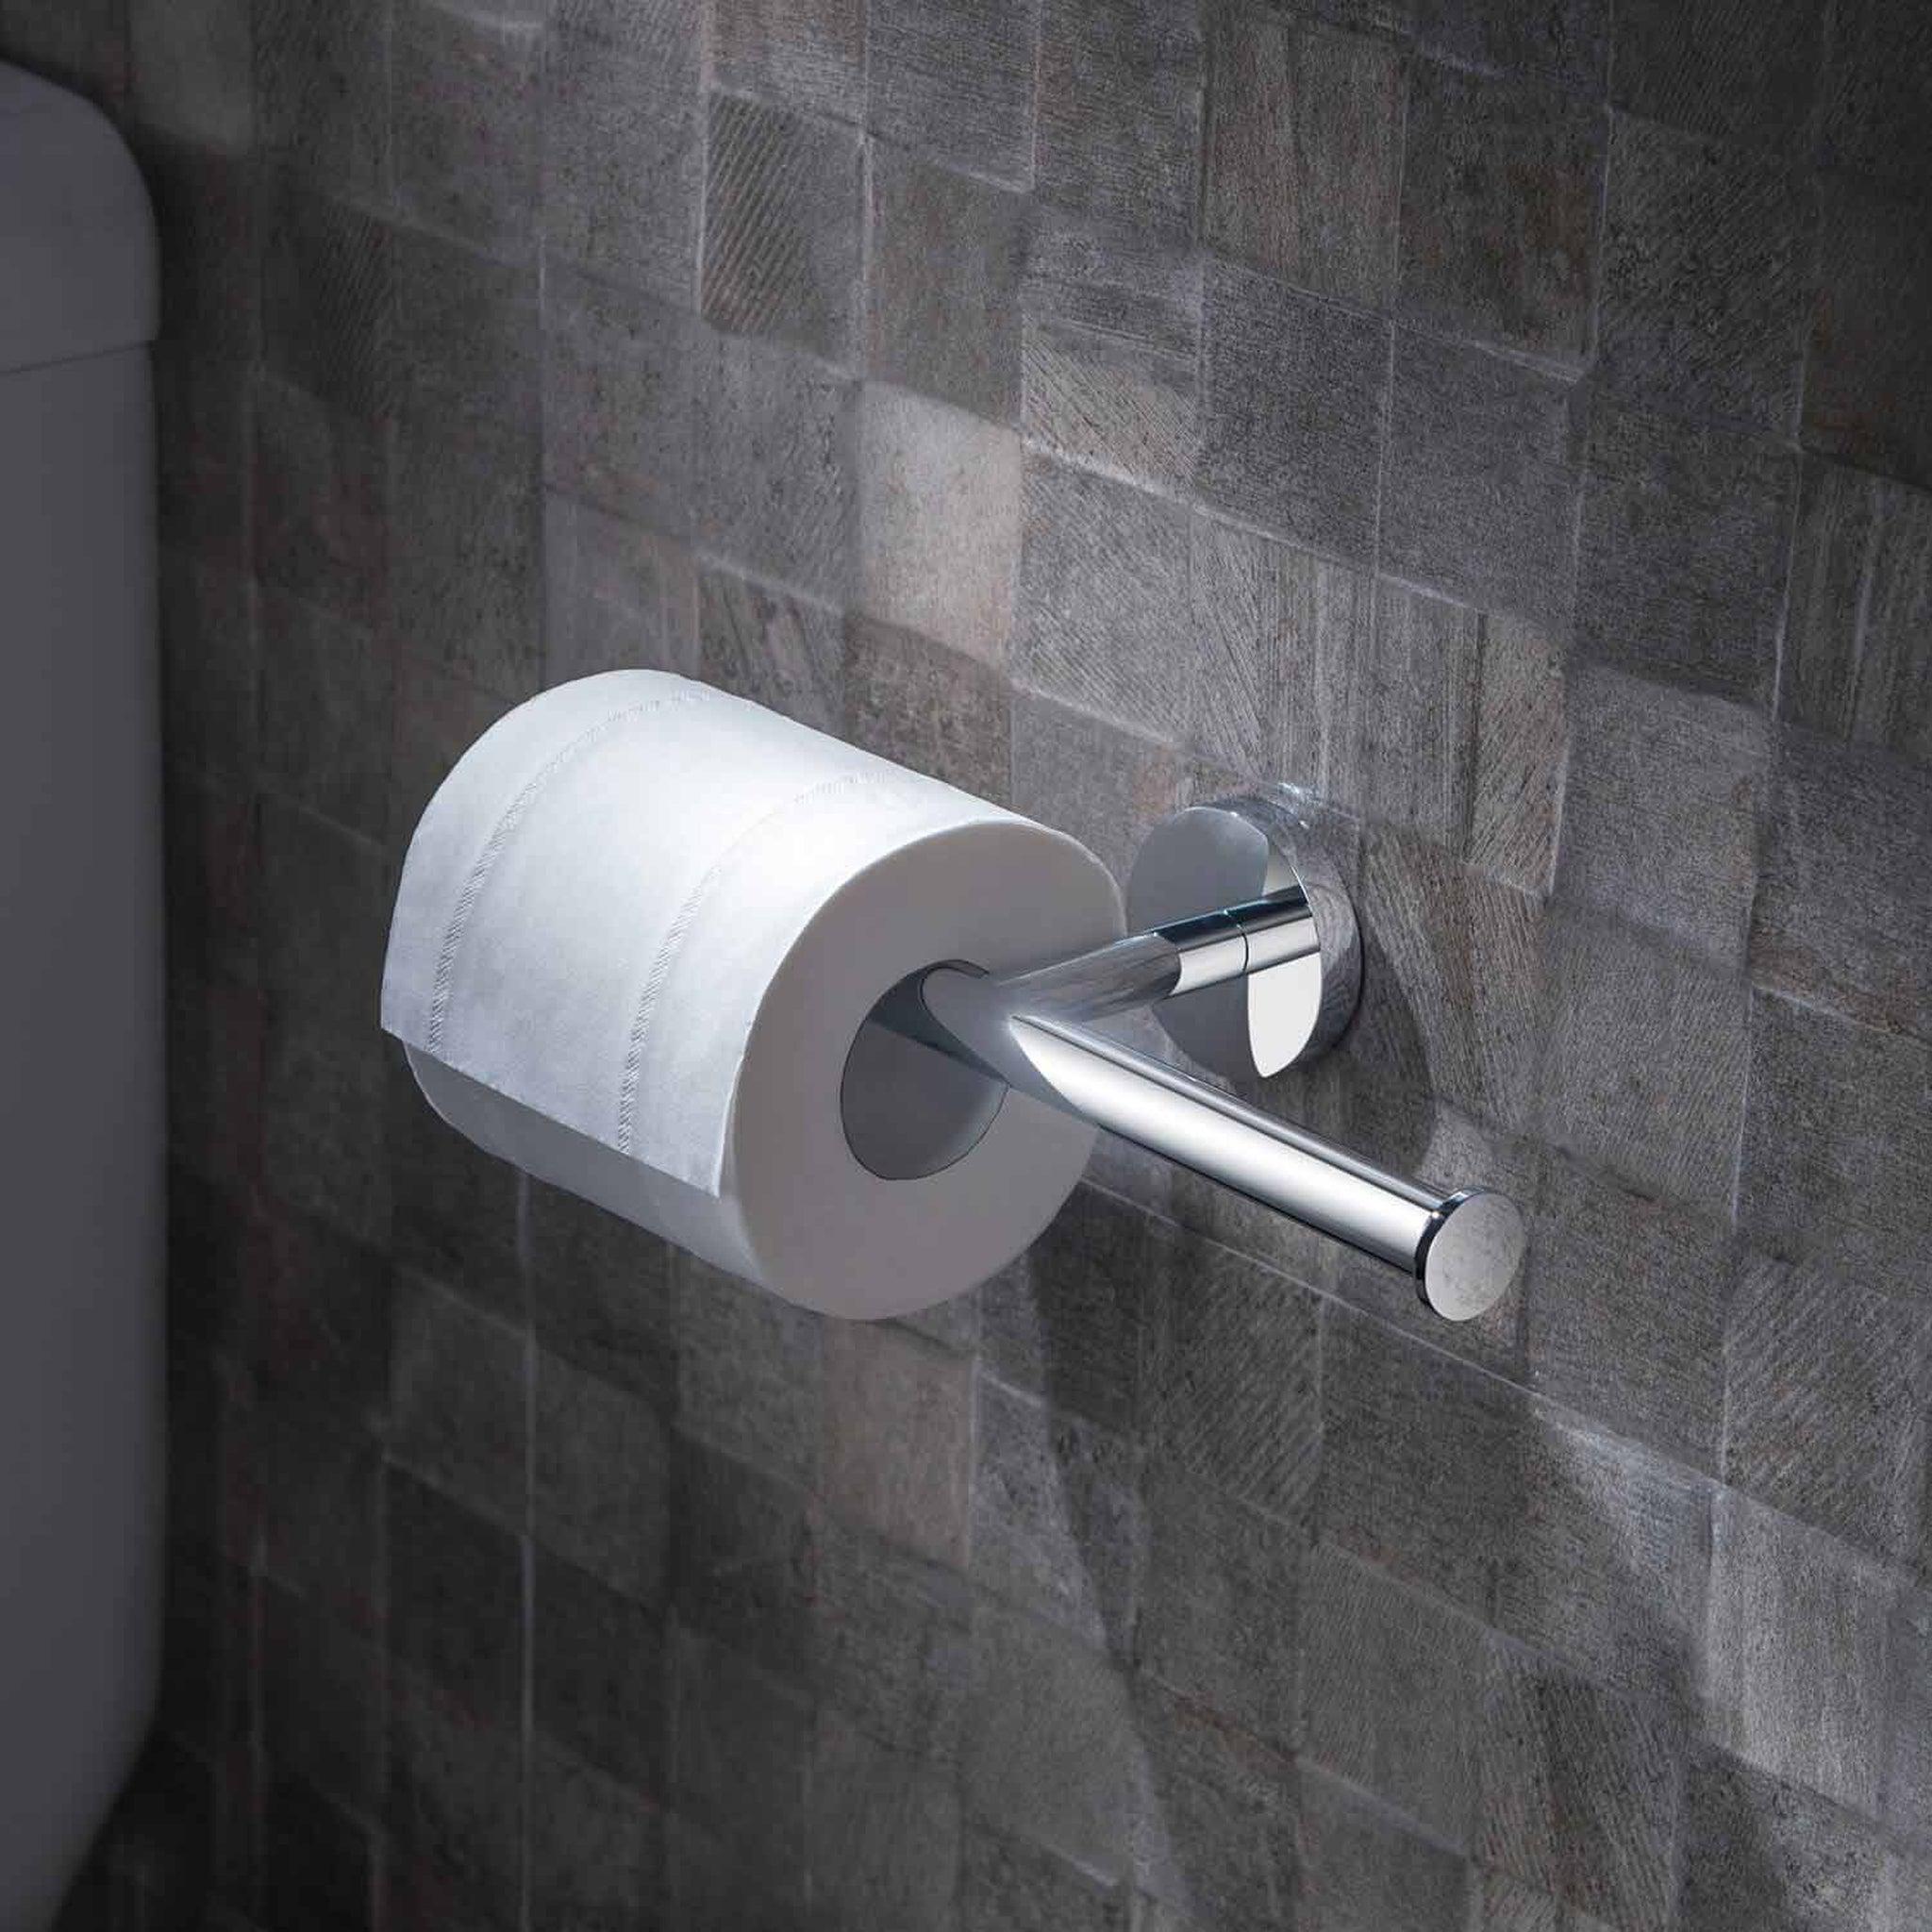 KIBI, KIBI Circular Brass Bathroom Double Toilet Paper Holder in Chrome Finish